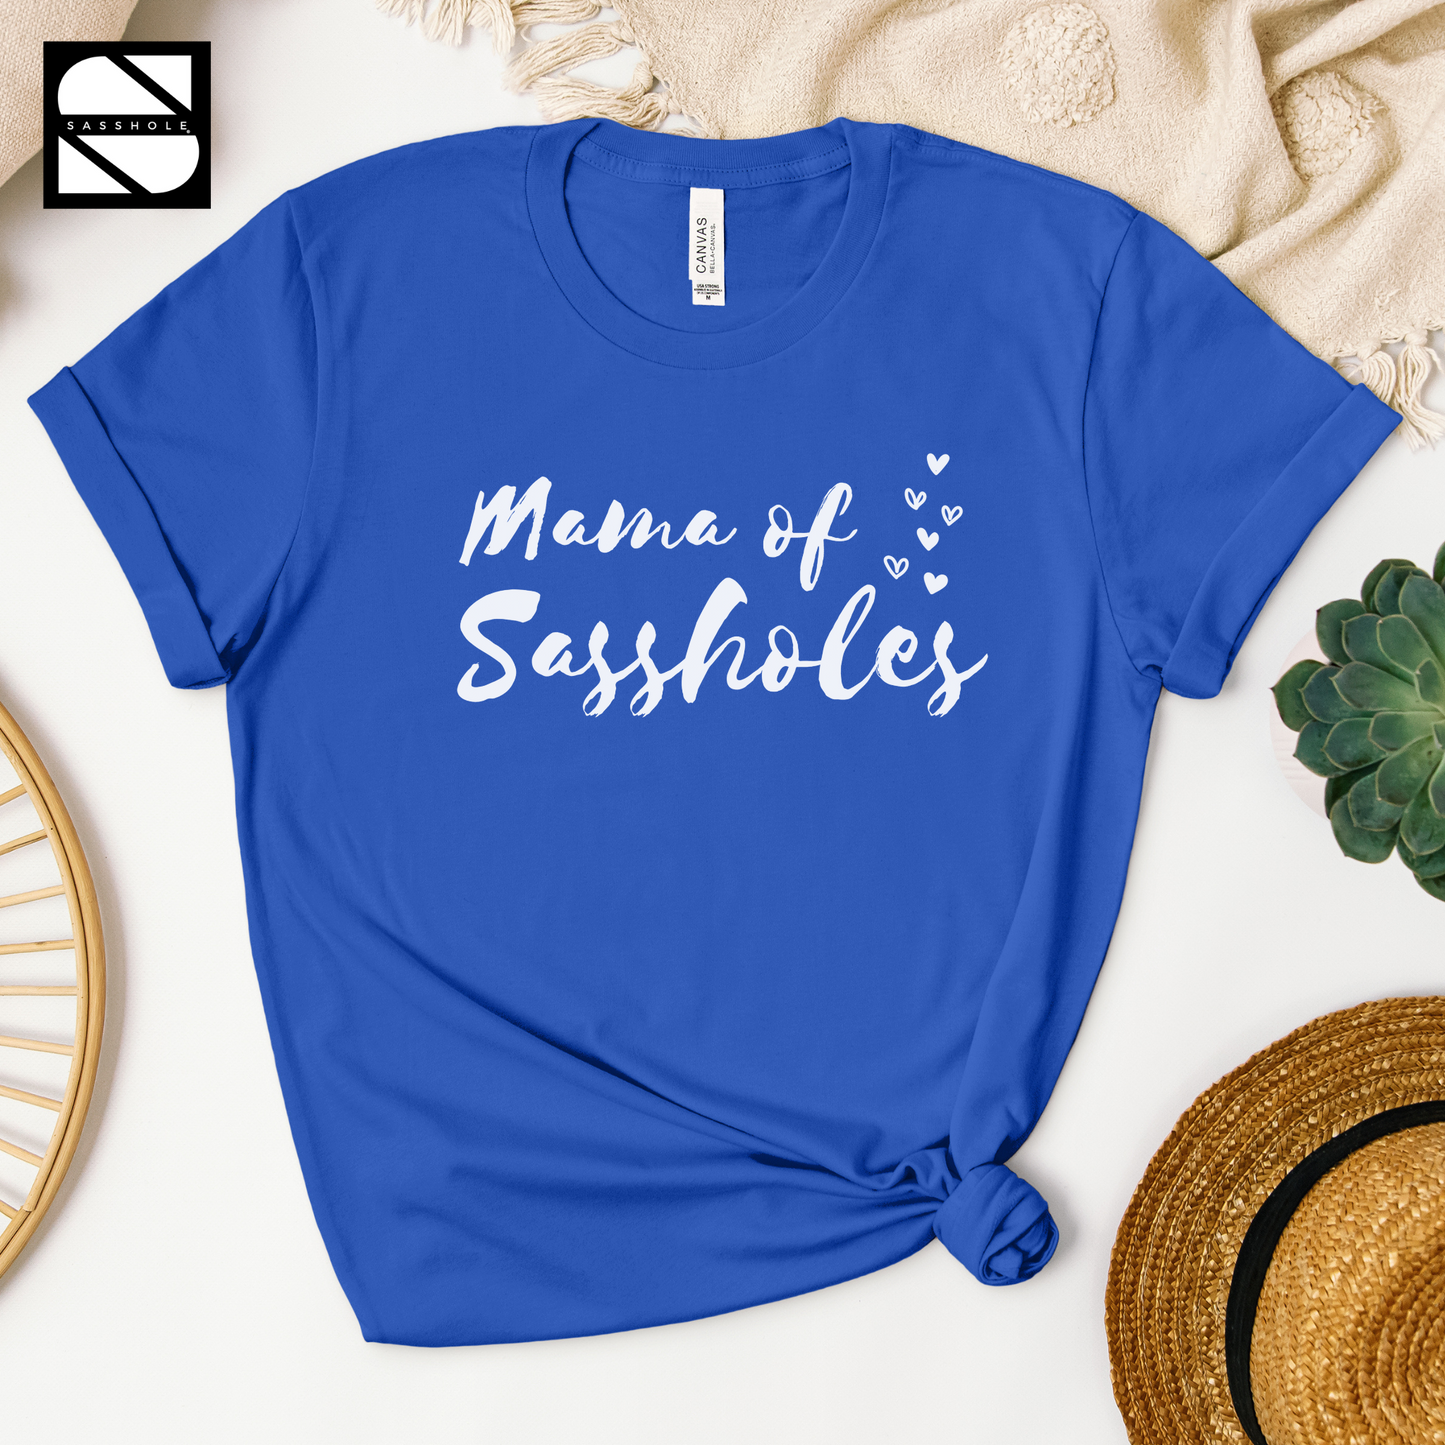 Mama of Sassholes: Mom Humor Tee for Mom's